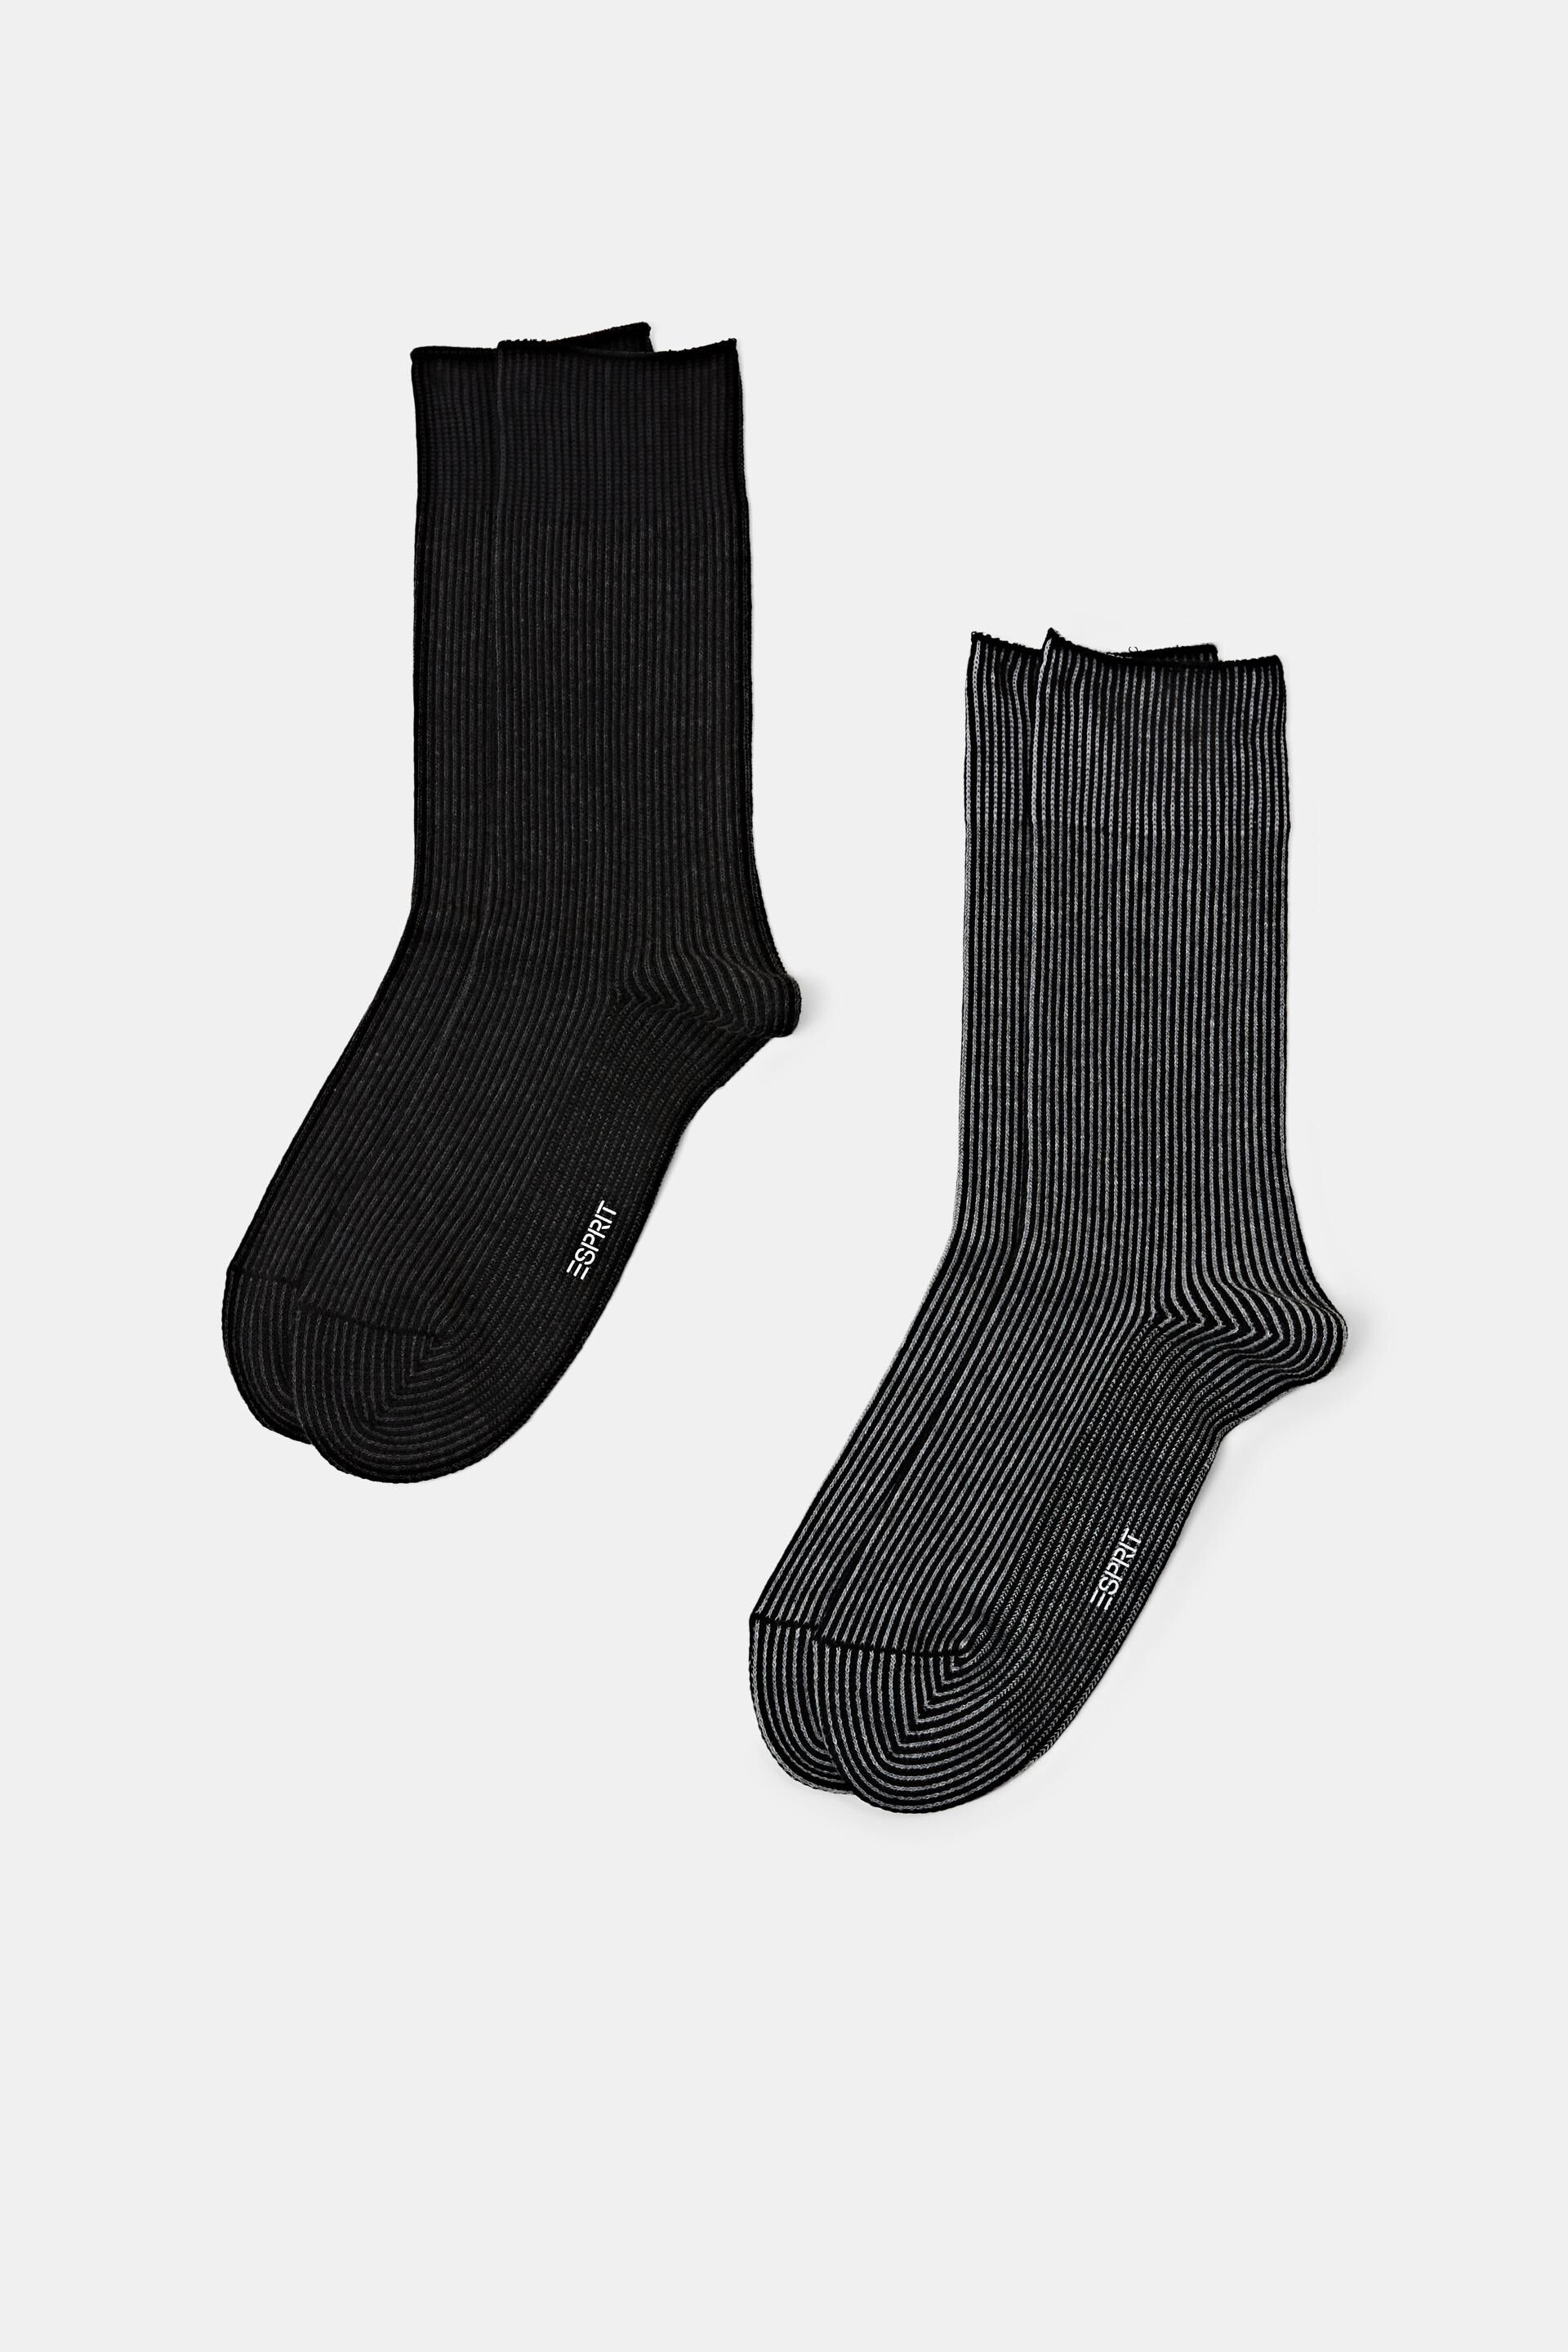 Esprit Mode Socks